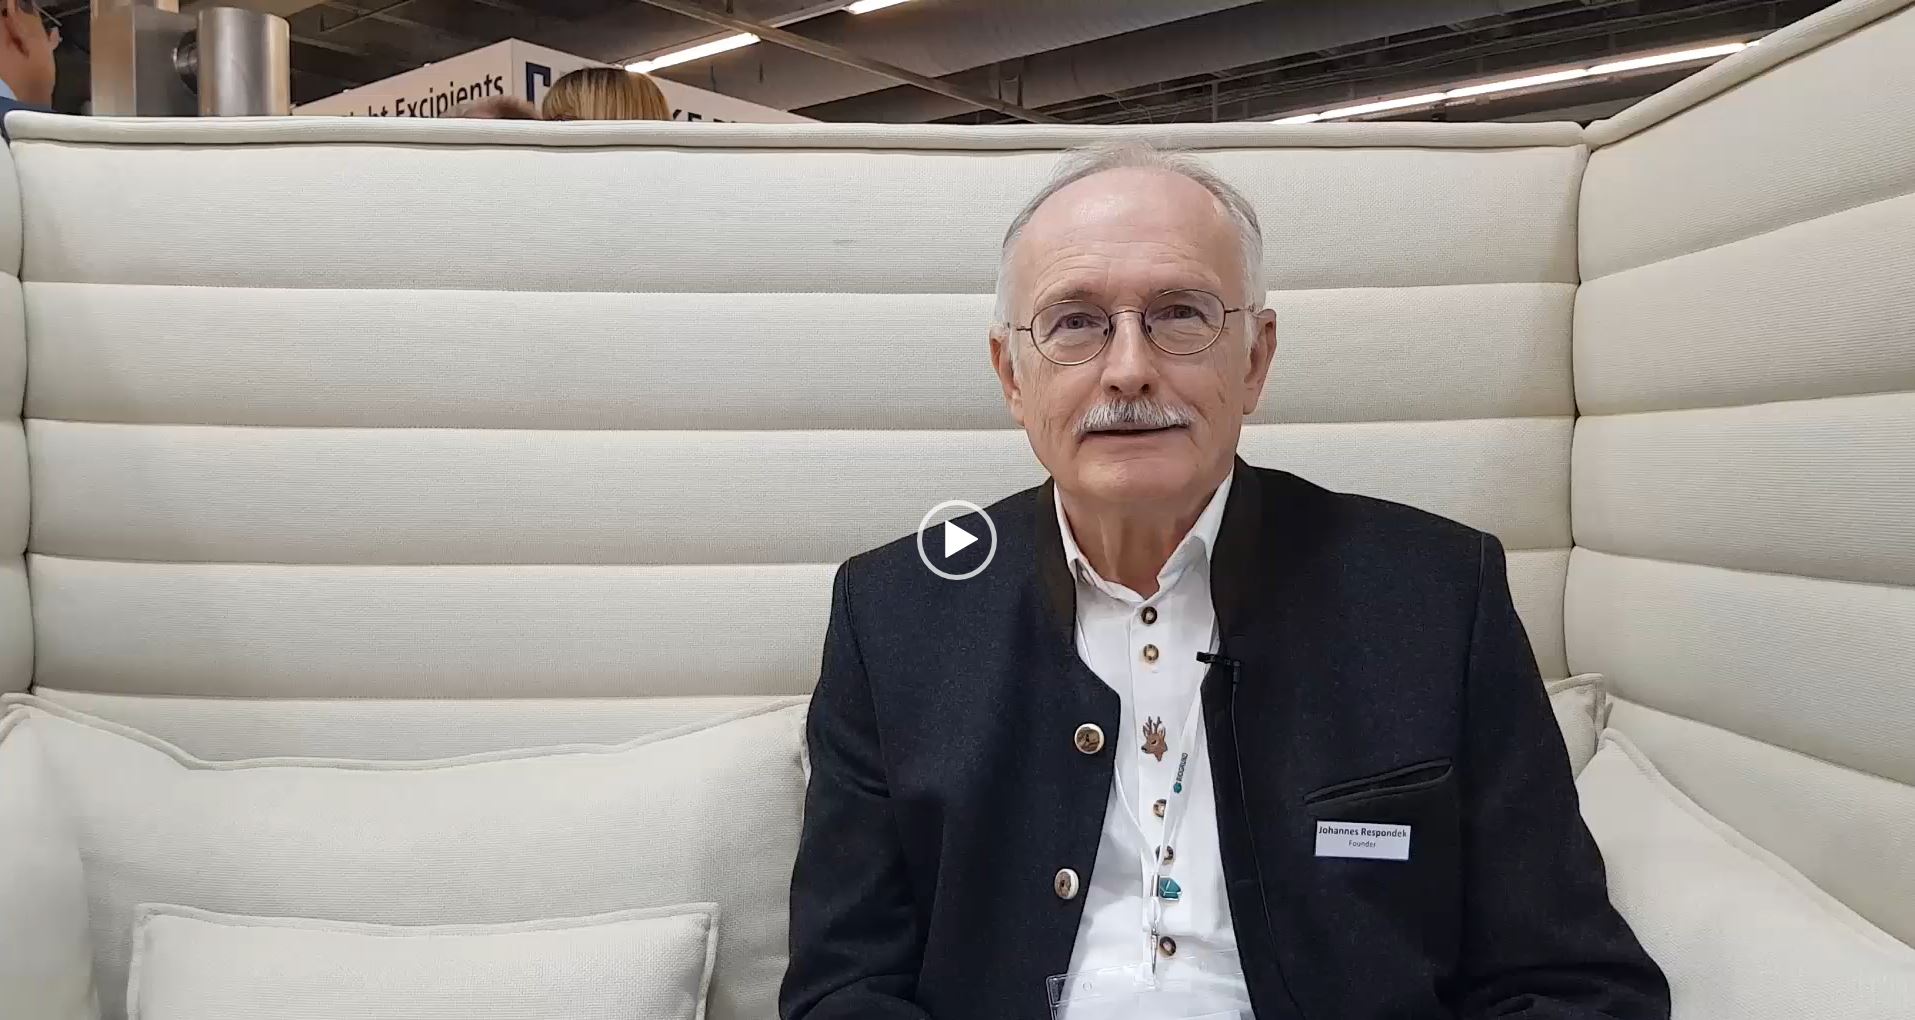 Interview Hans Respondek from Biogrund at CPhI 2019